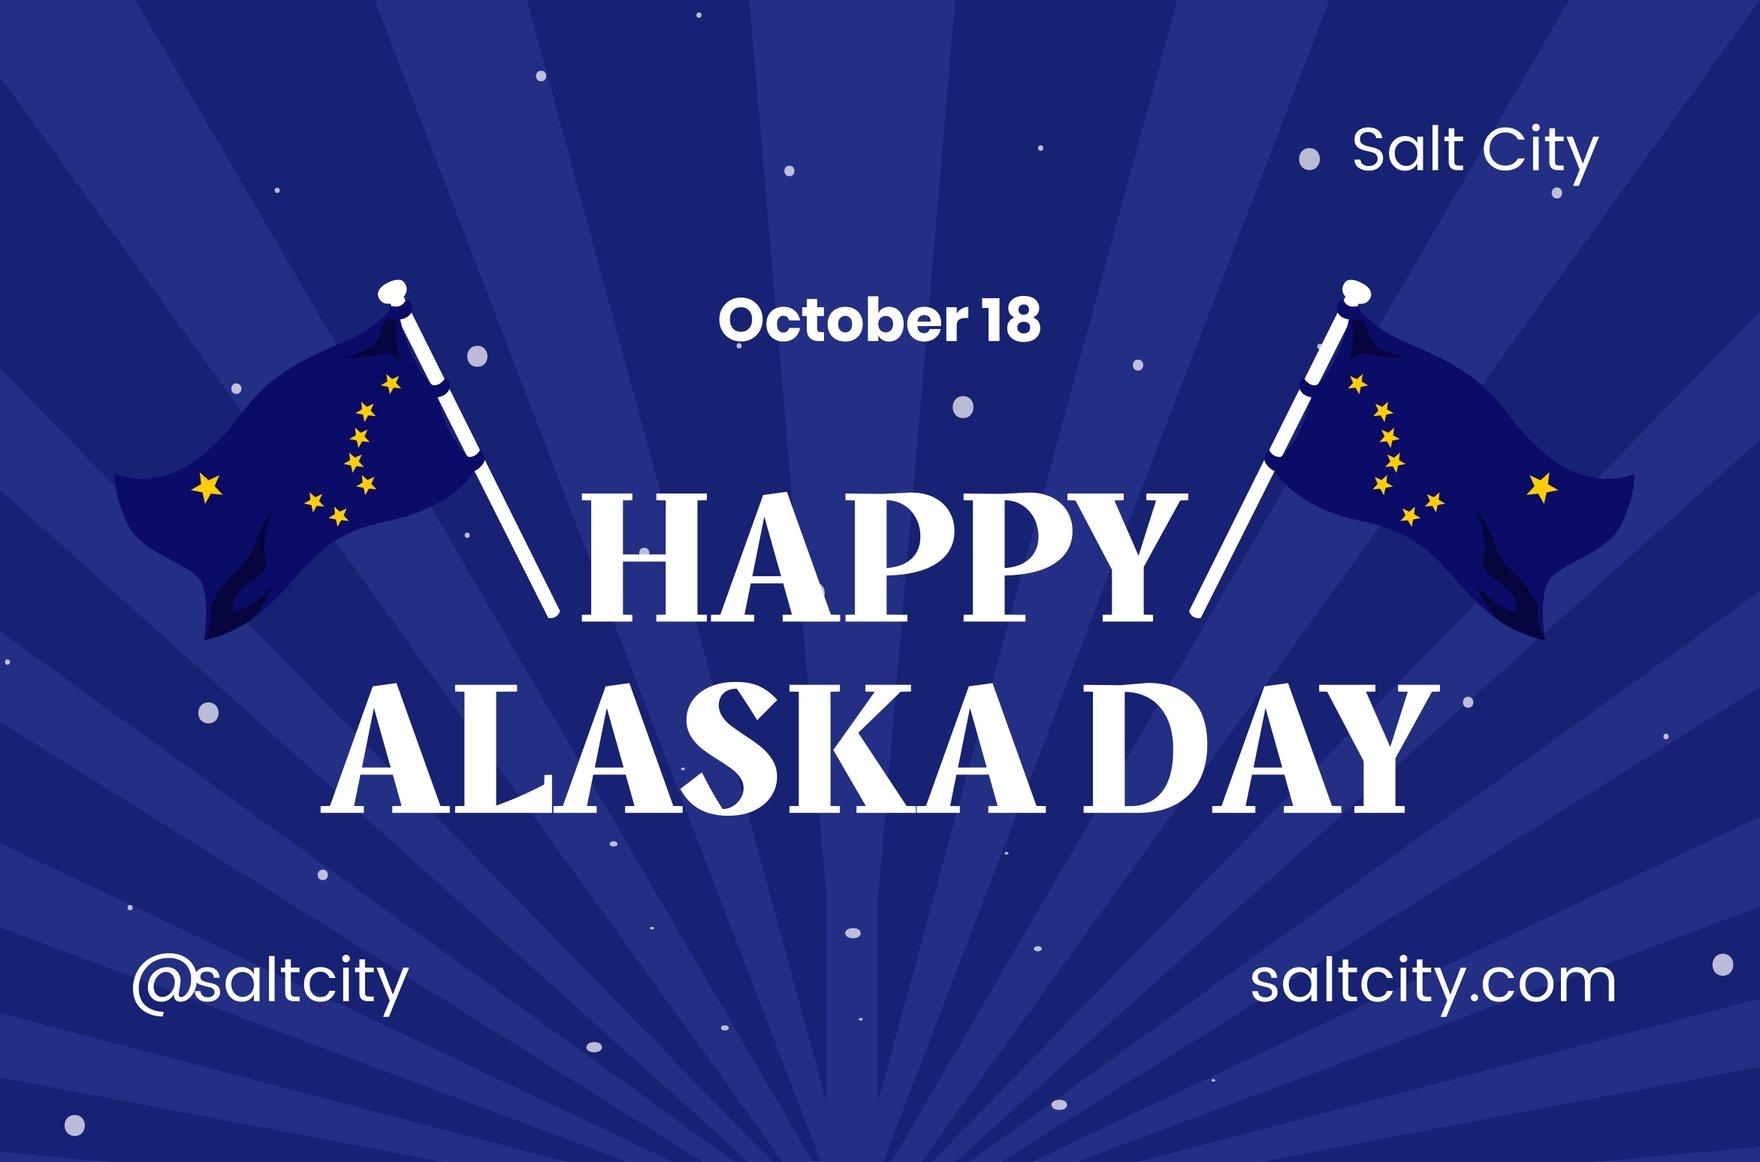 Alaska Day Banner in Illustrator, PSD, EPS, SVG, JPG, PNG